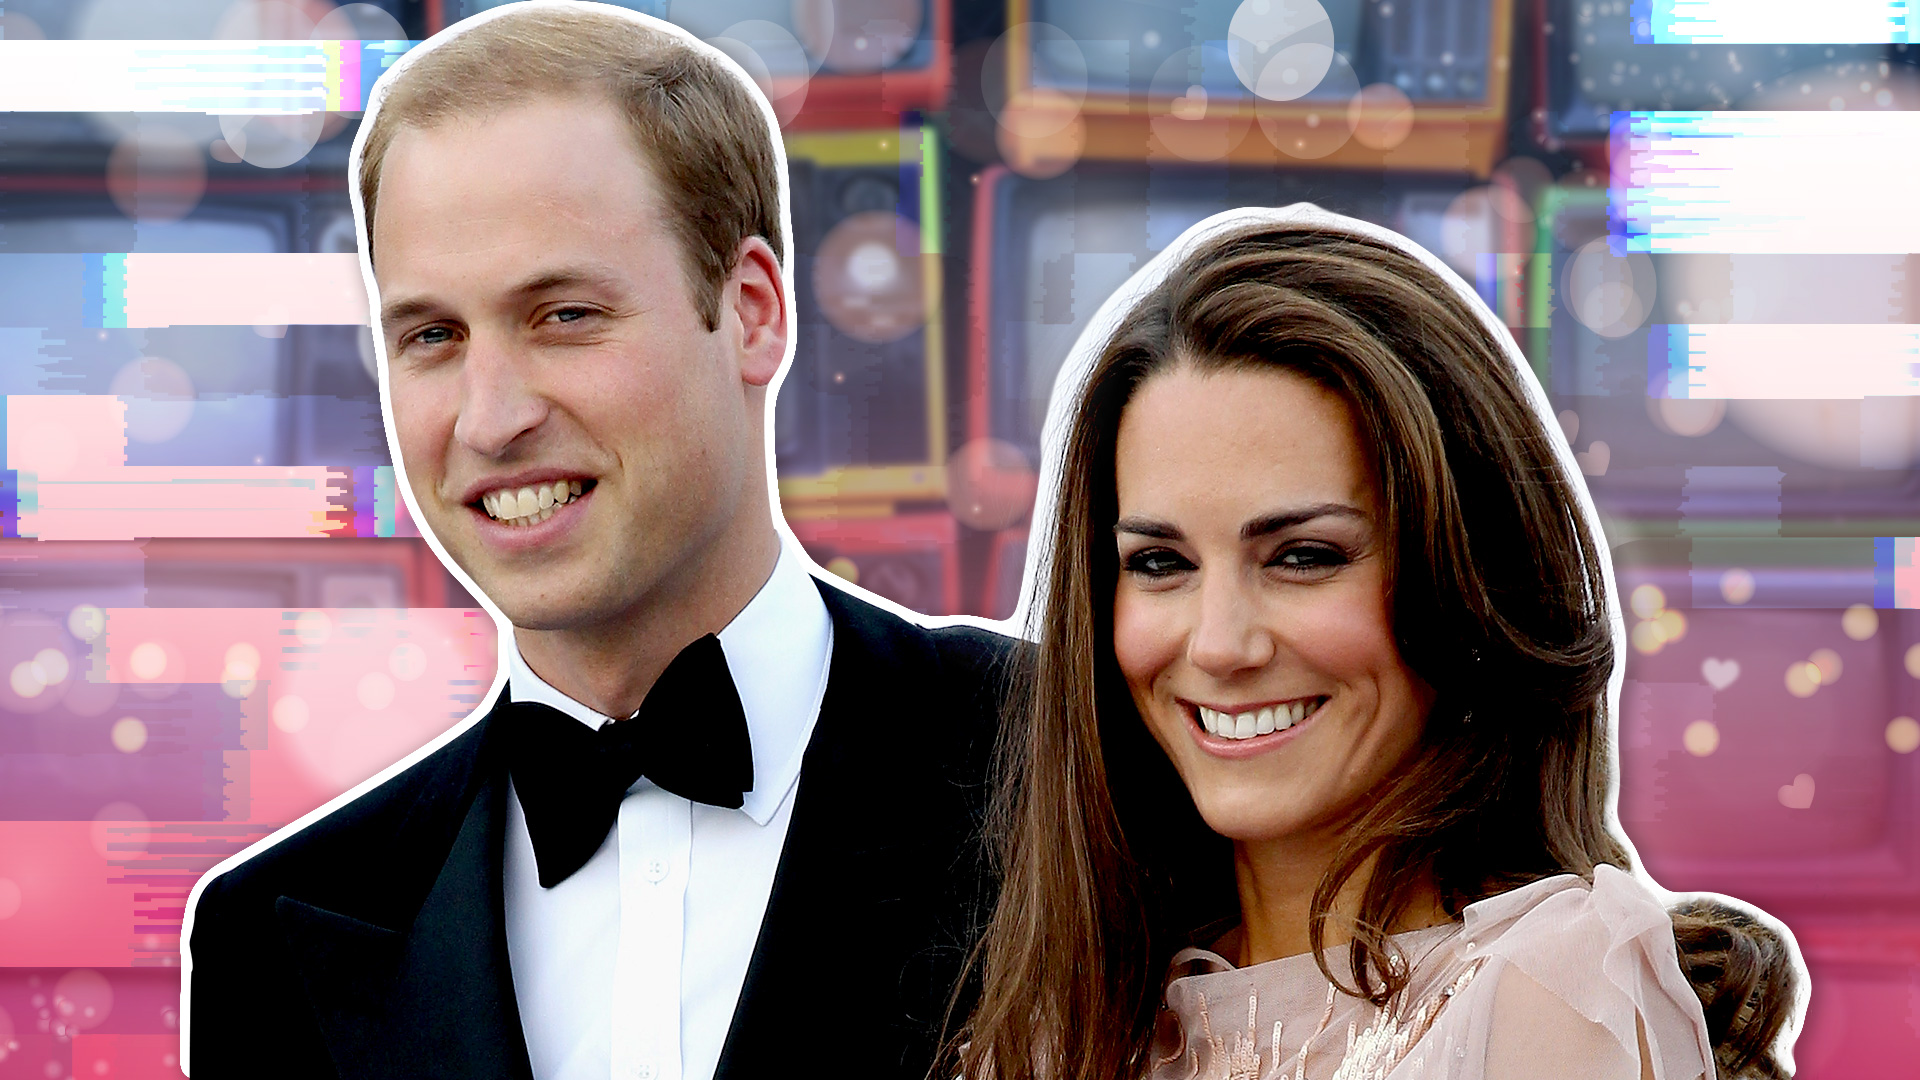 Royal Divorce Between Kate Middleton and Prince William?